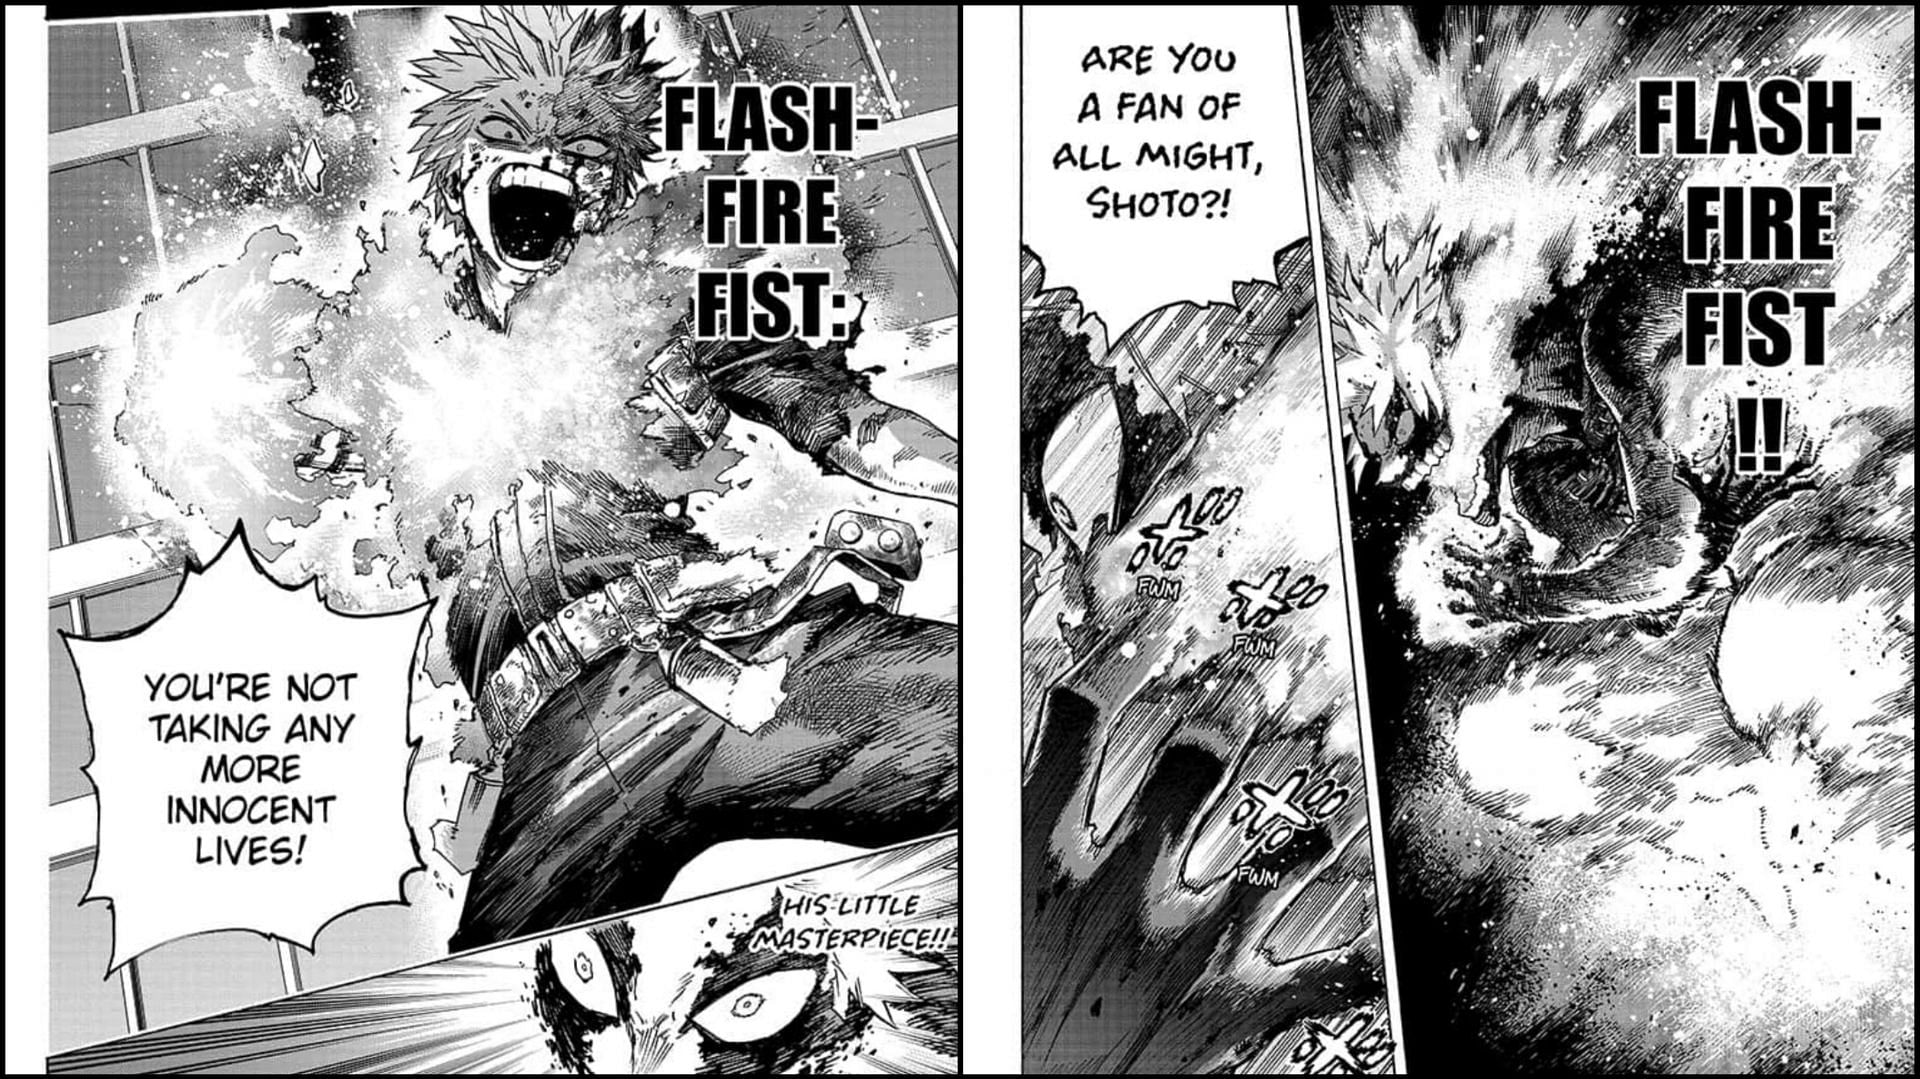 Twin Flashfires in My Hero Academia chapter 351 (Image via Shueisha)